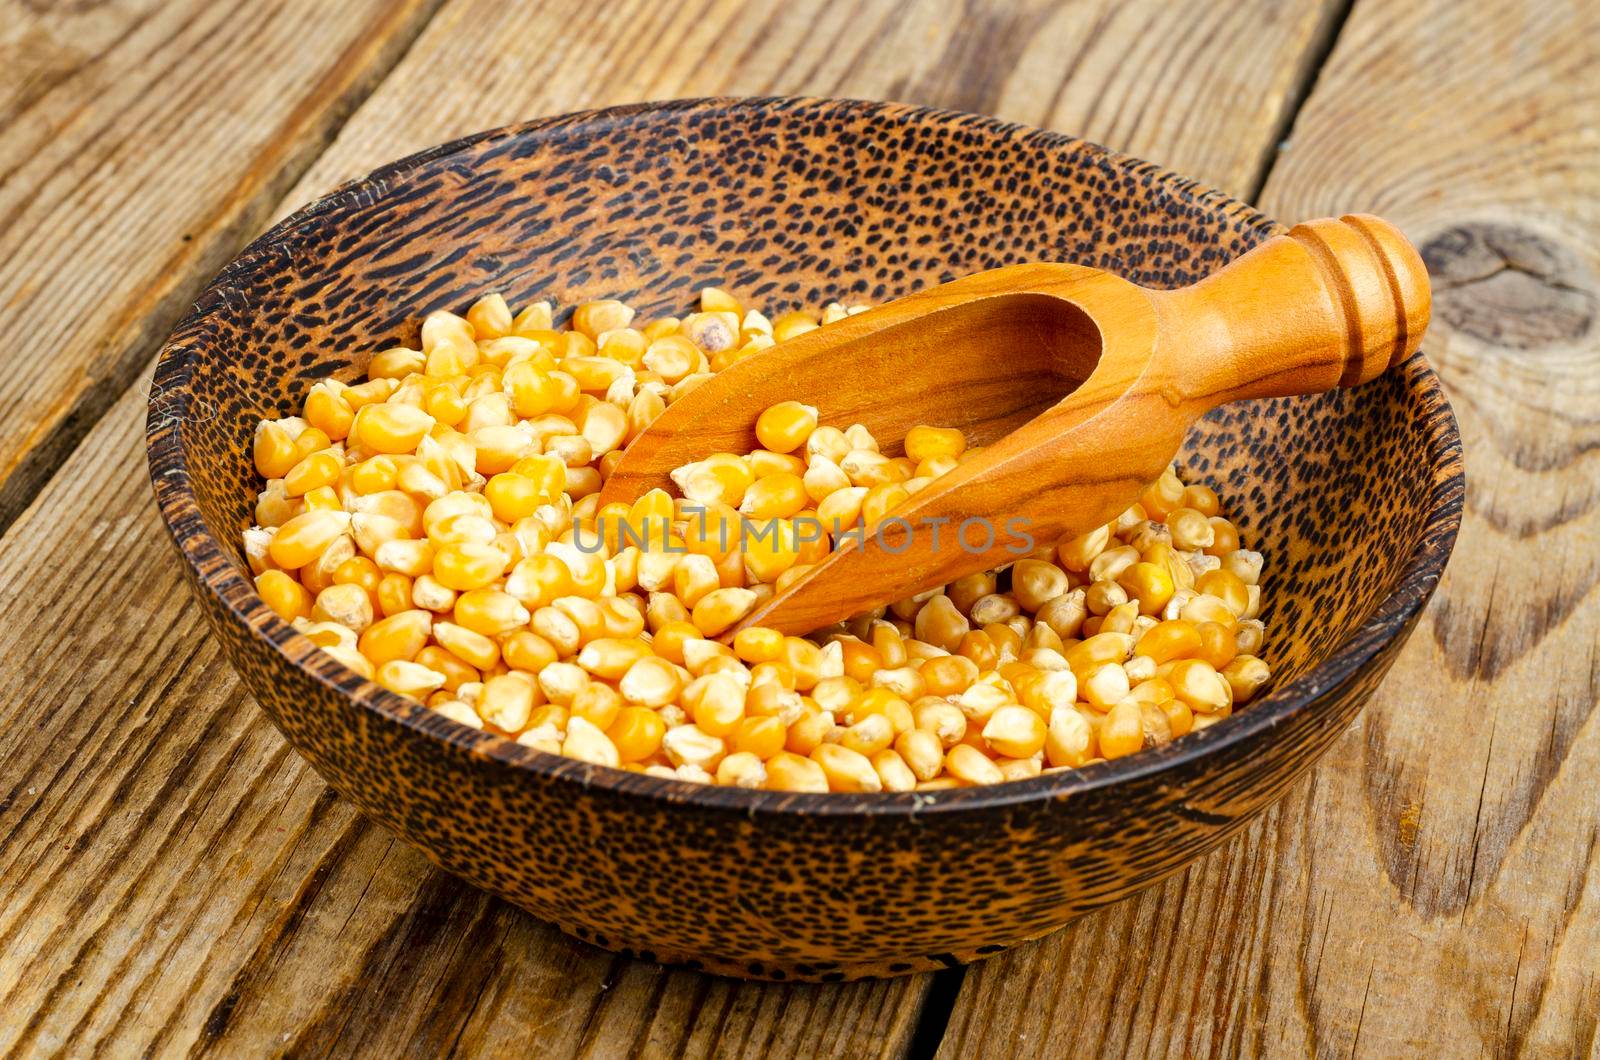 Dry corn grains in bowl for making popcorn. Studio Photo